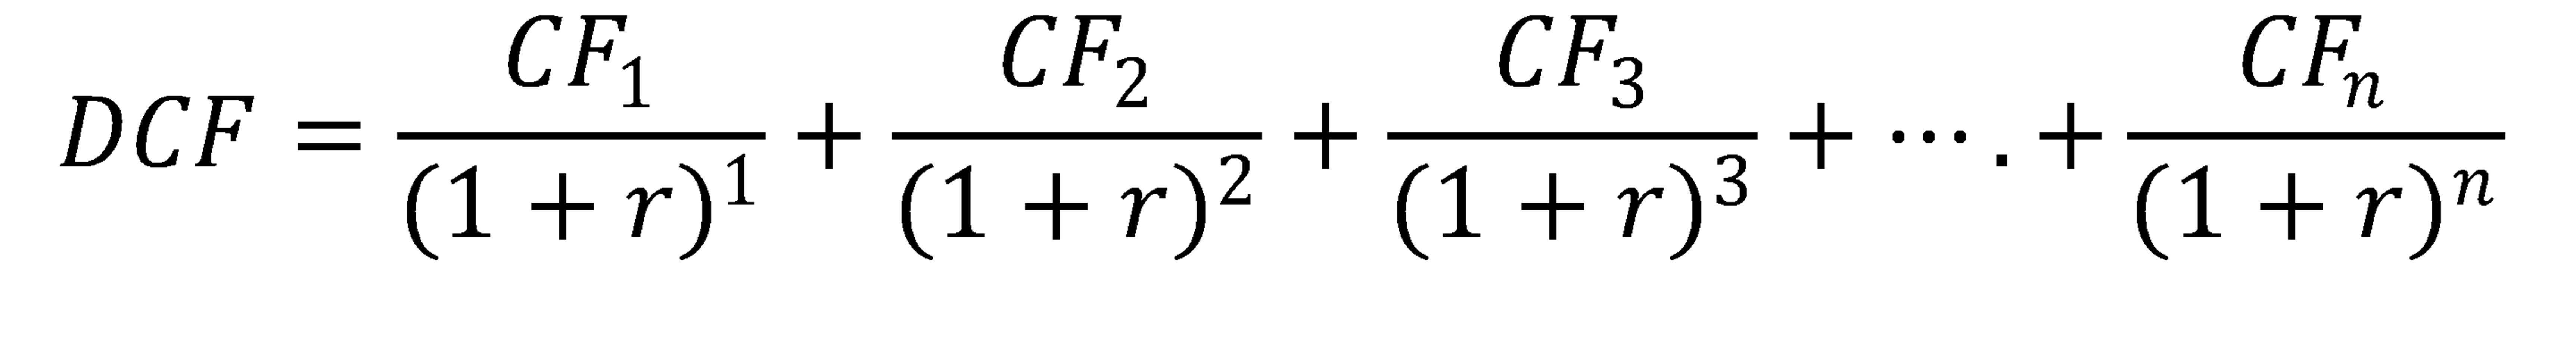 dcf calculation